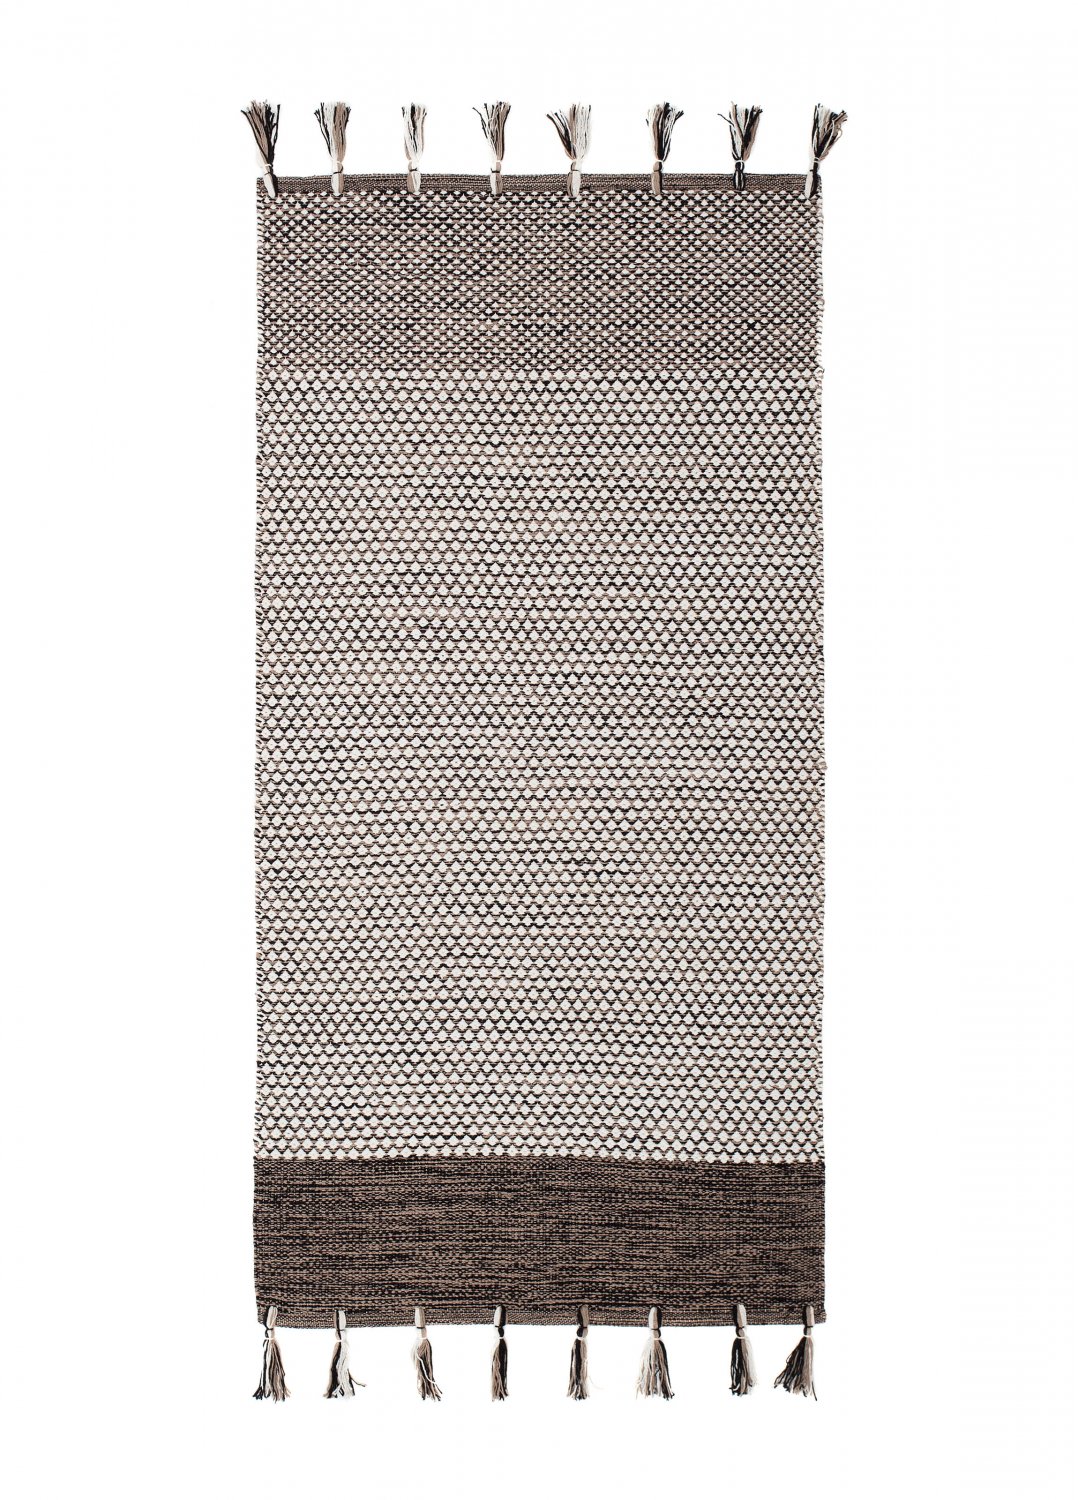 Rag rugs - Vinga (white/grey/black)